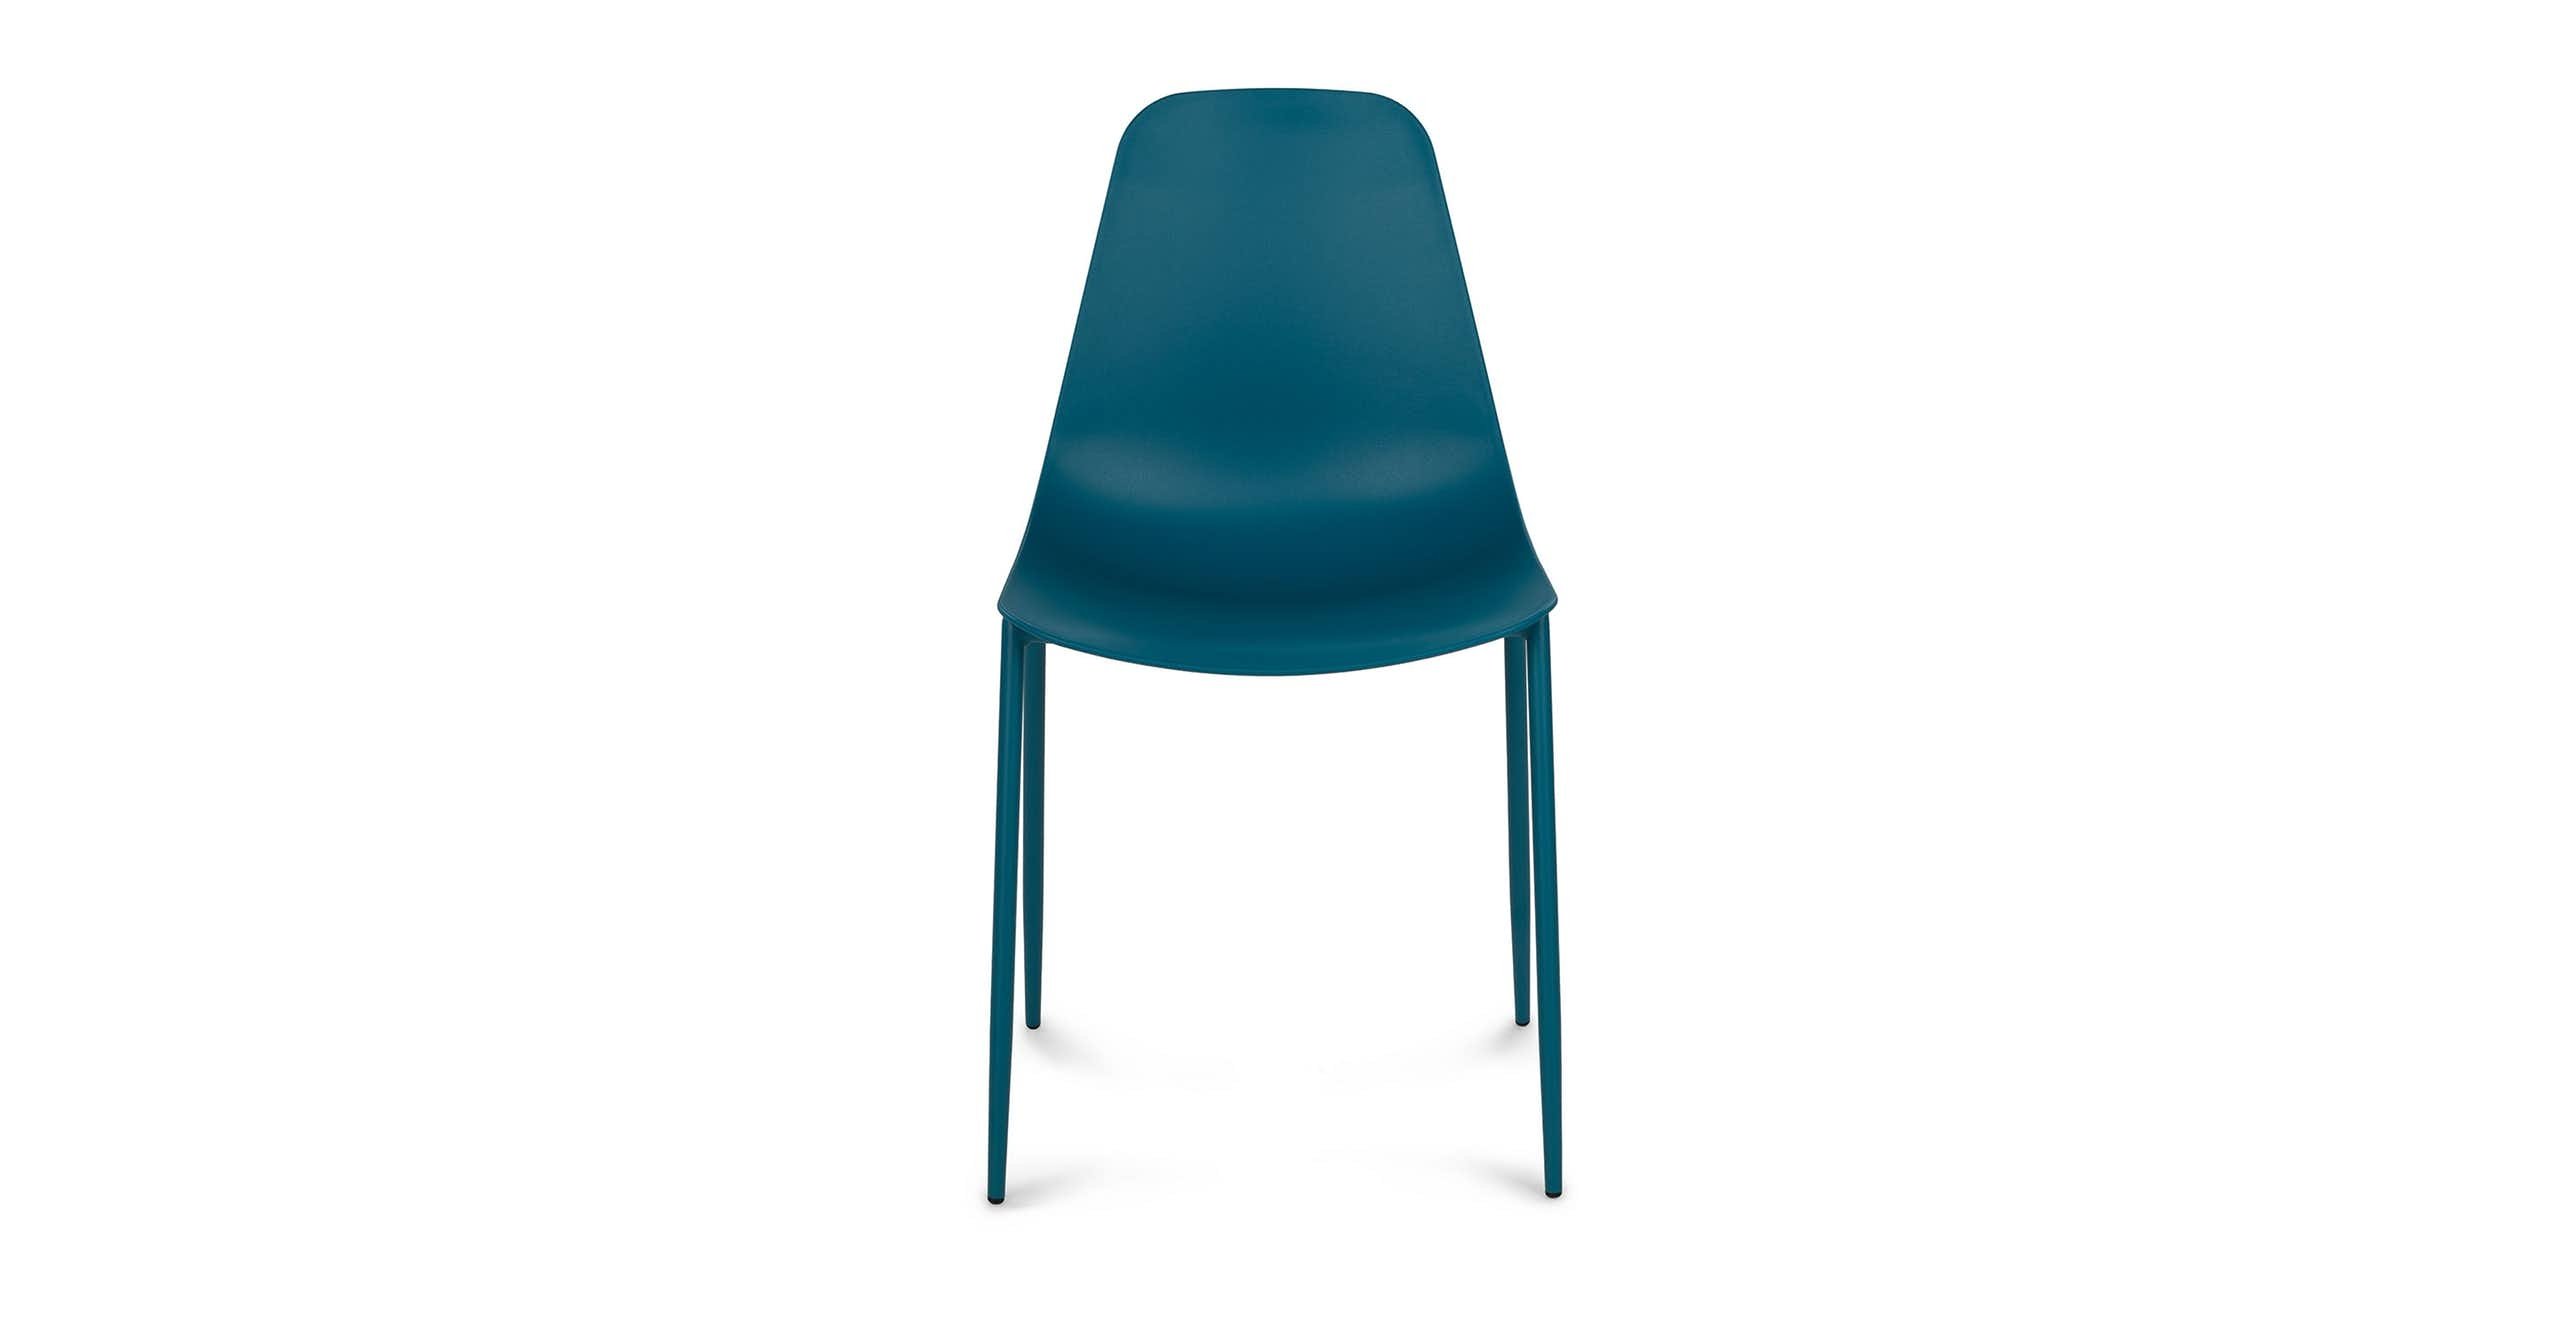 SVELTI DEEP COVE TEAL CHAIR - Single Chair - Image 1